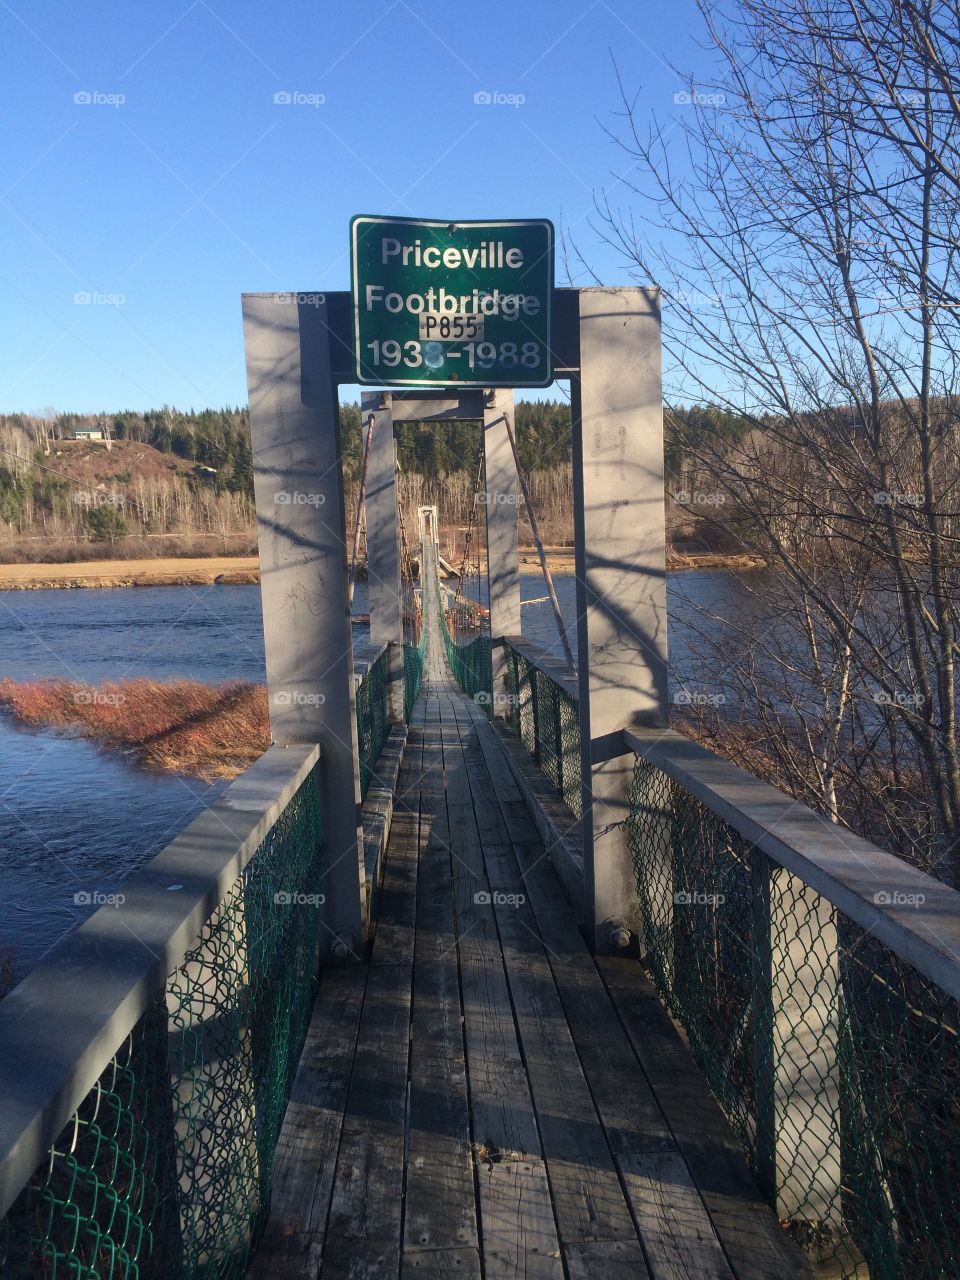 Priceville foot bridge 